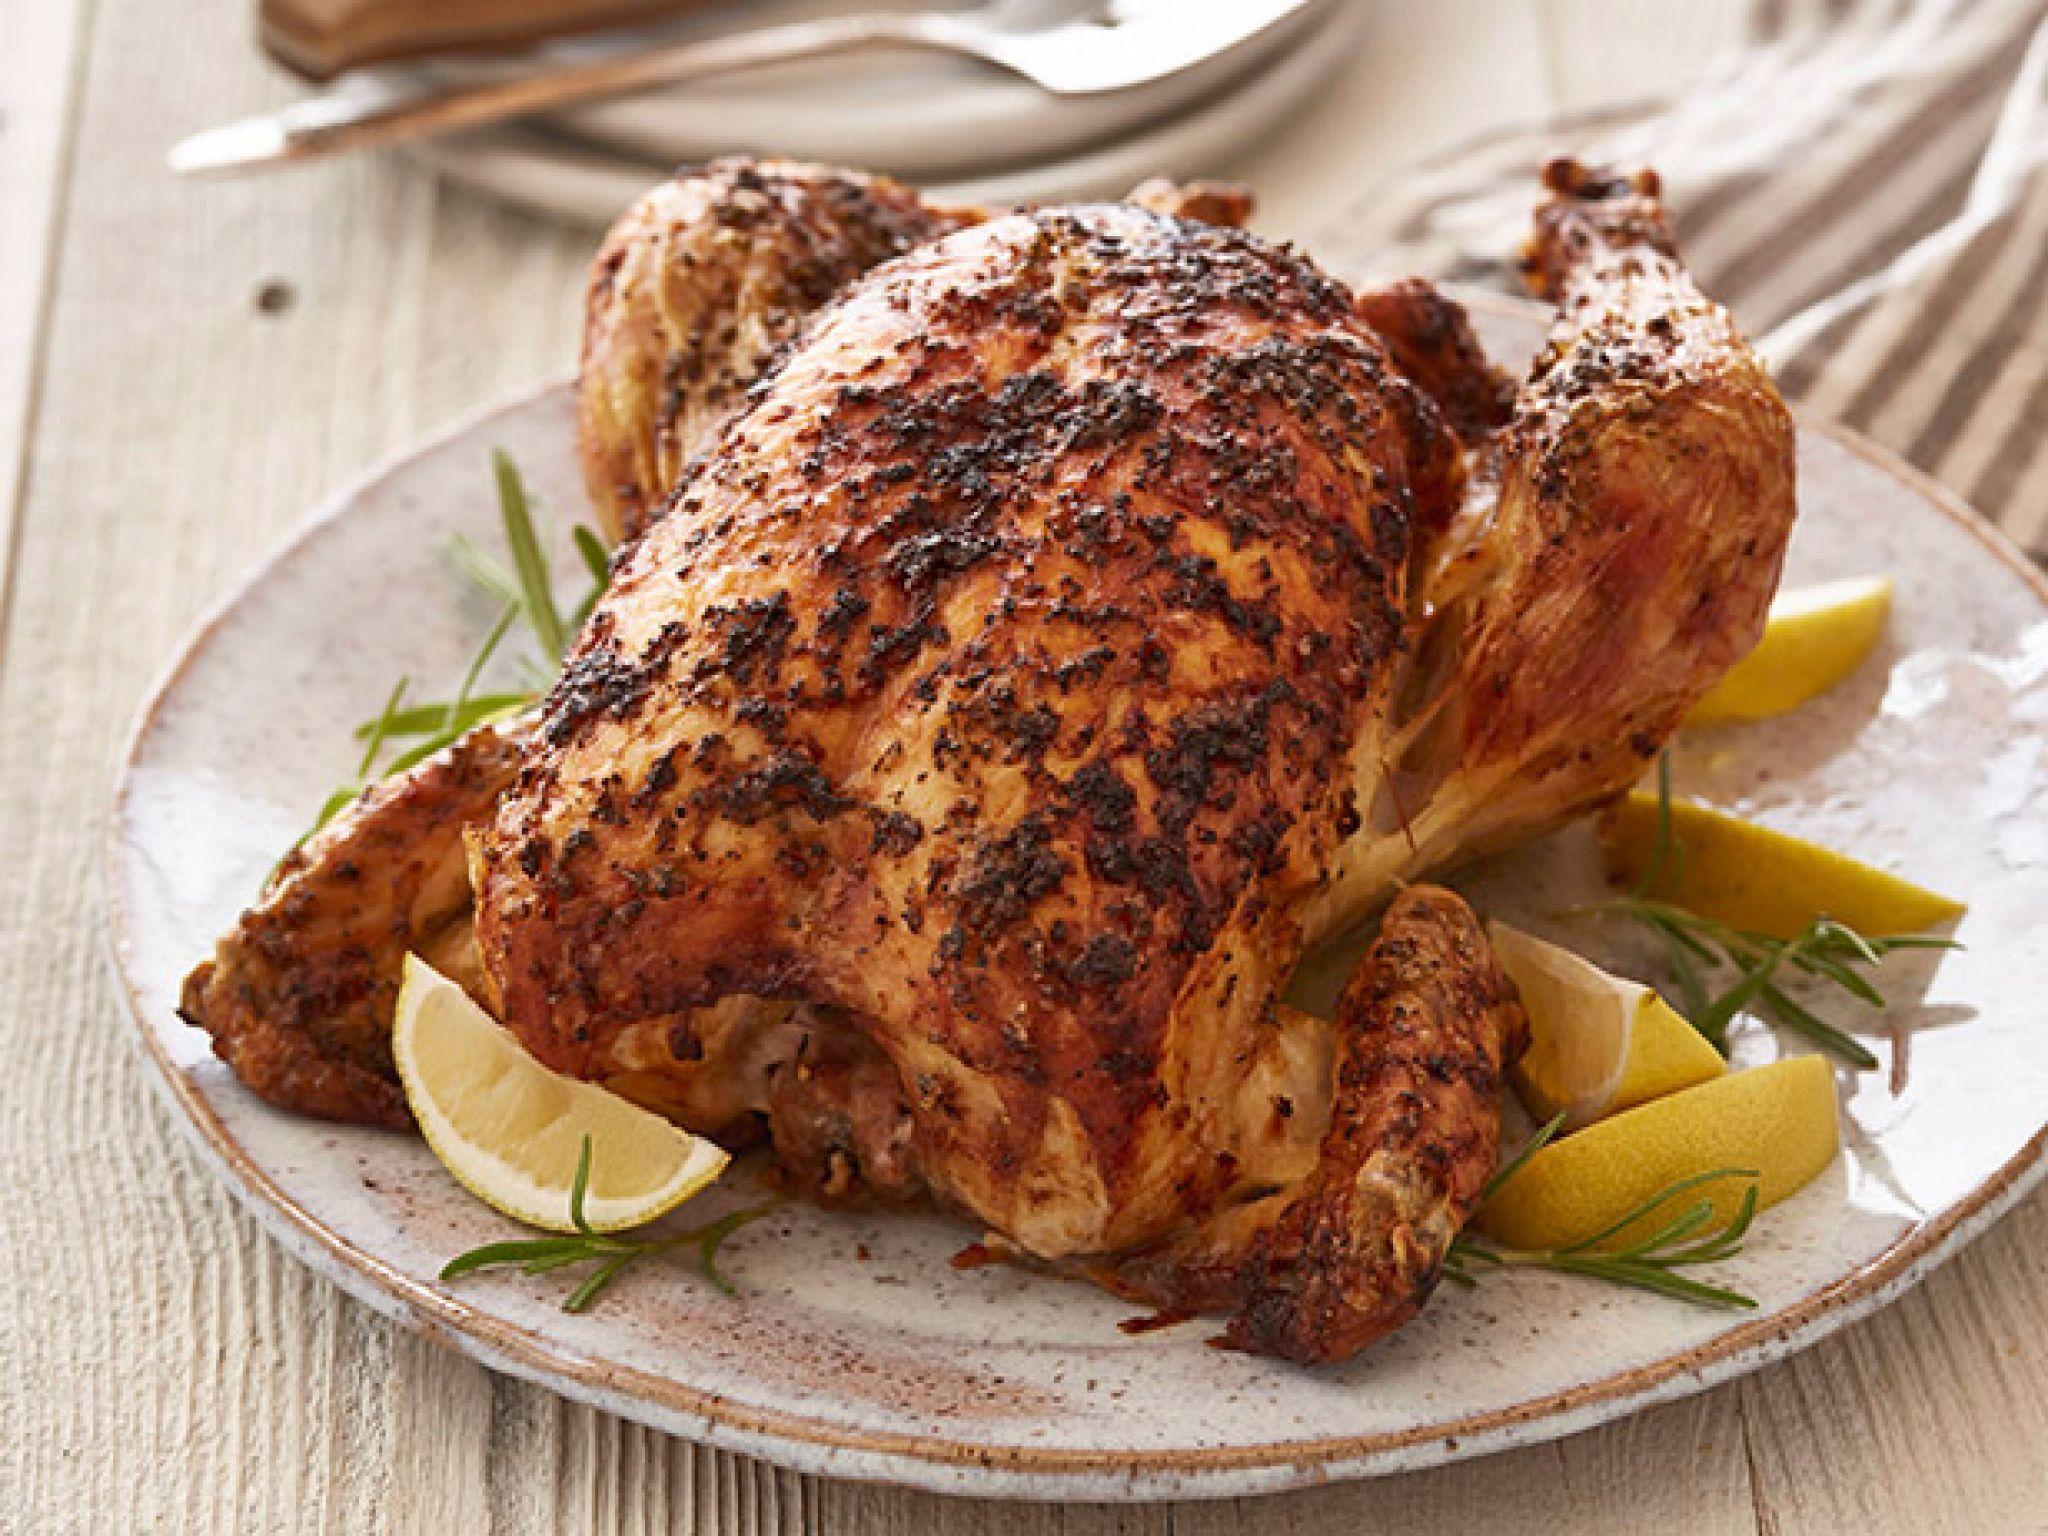 Easy Comfort Food Recipes, Food Network. Roast chicken recipes